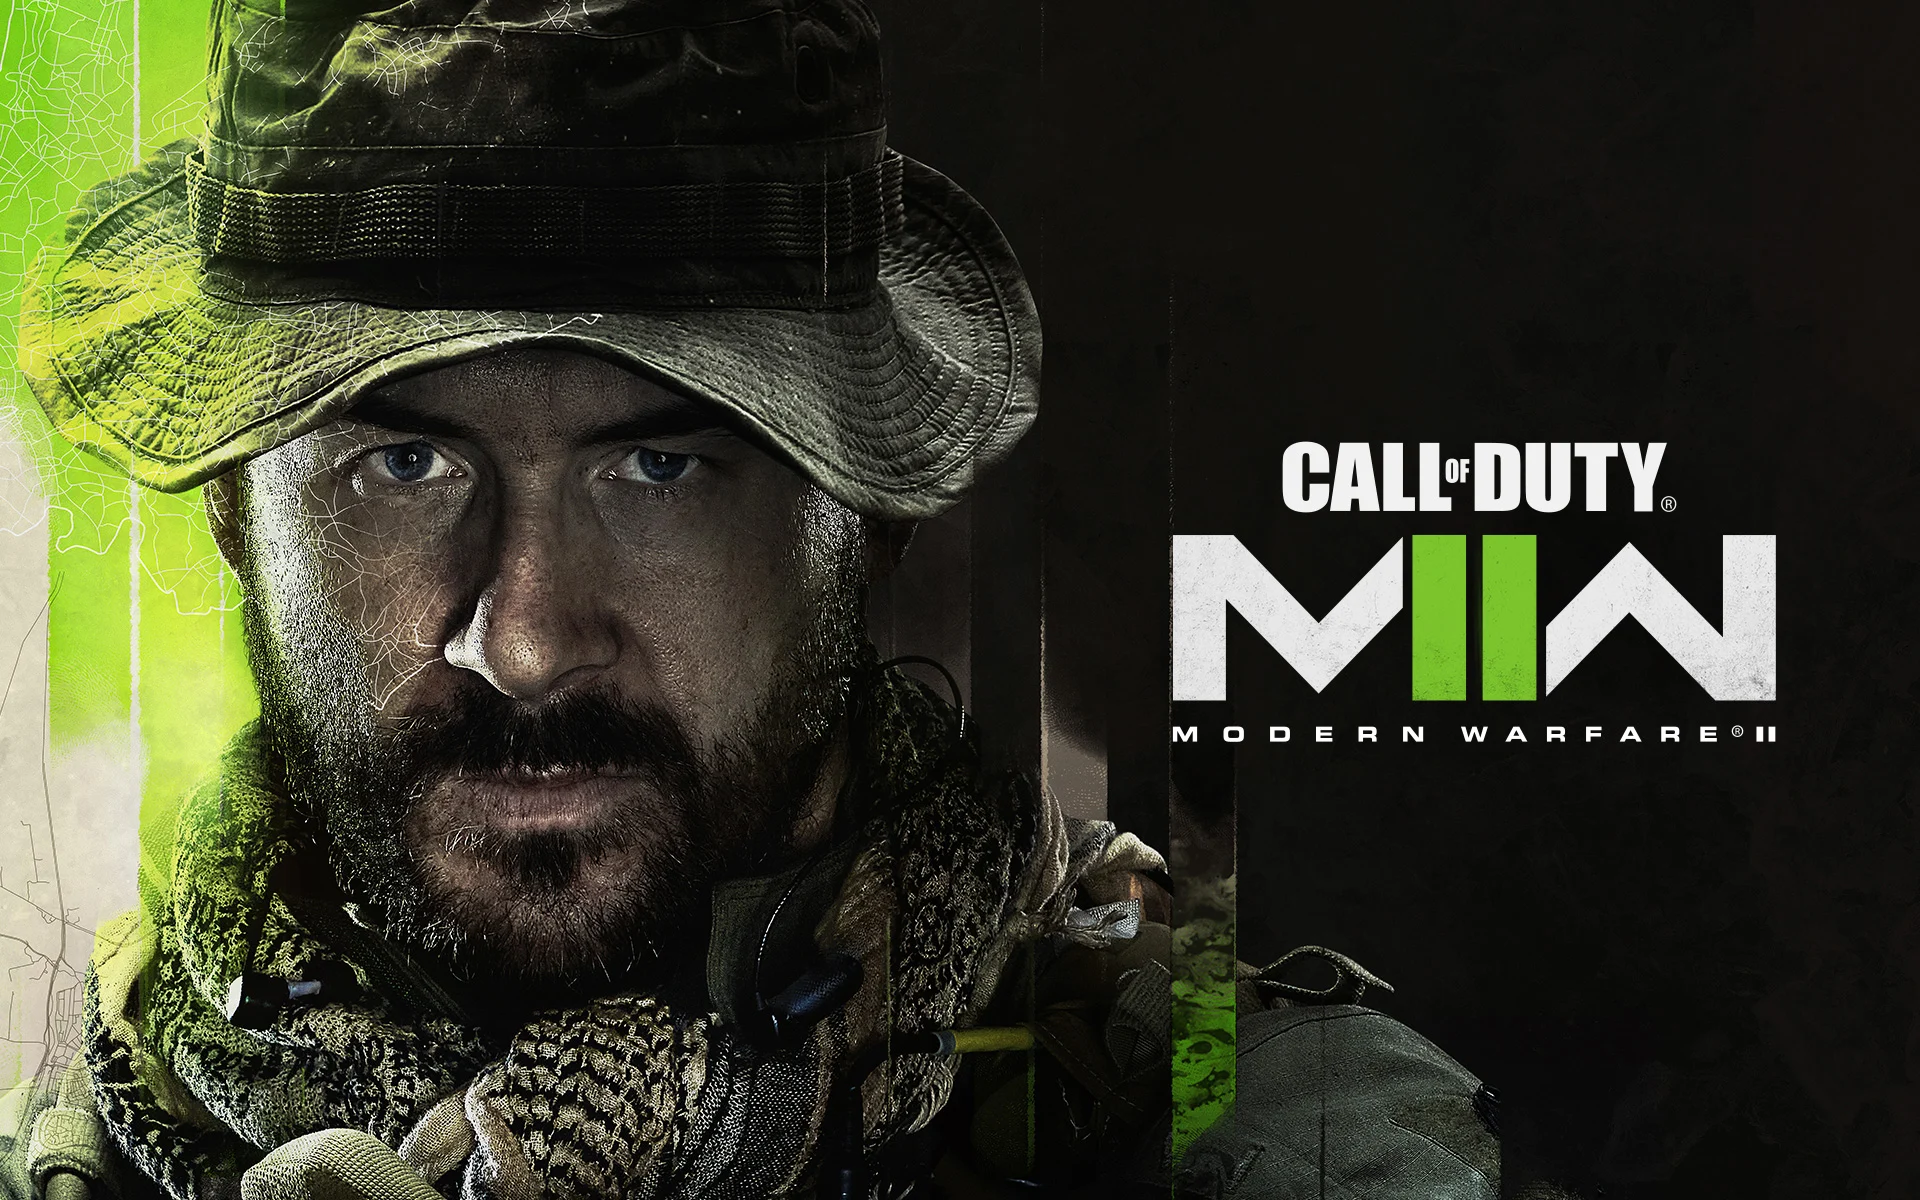 Call of Duty Modern Warfare 2 Torrent